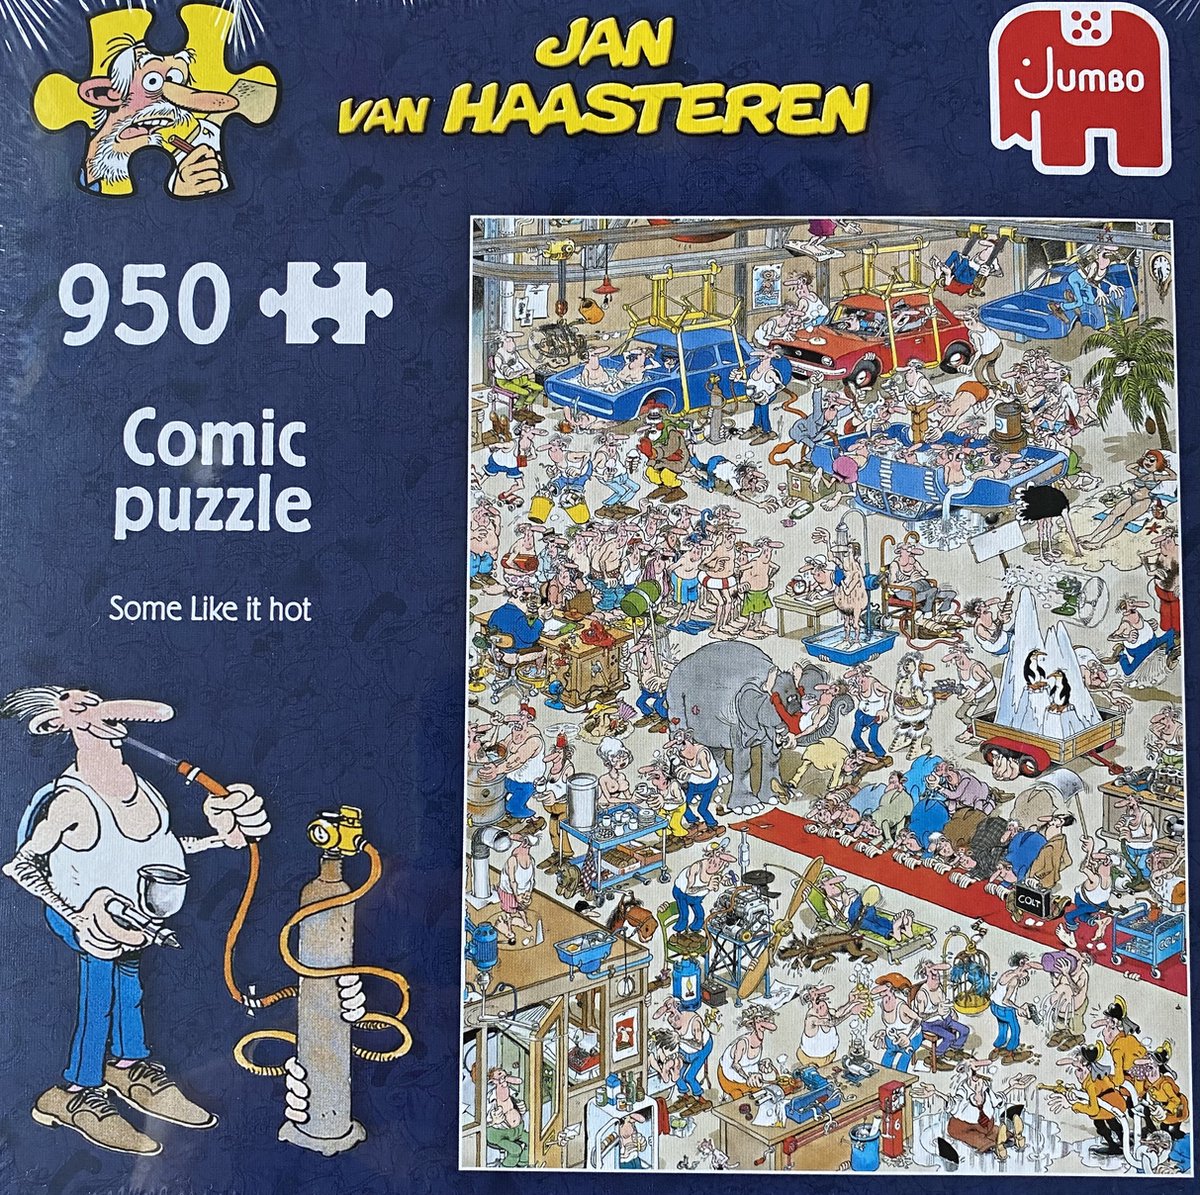 Jan van Haasteren Jumbo Some like it hot puzzel 950 stukjes Comic puzzle